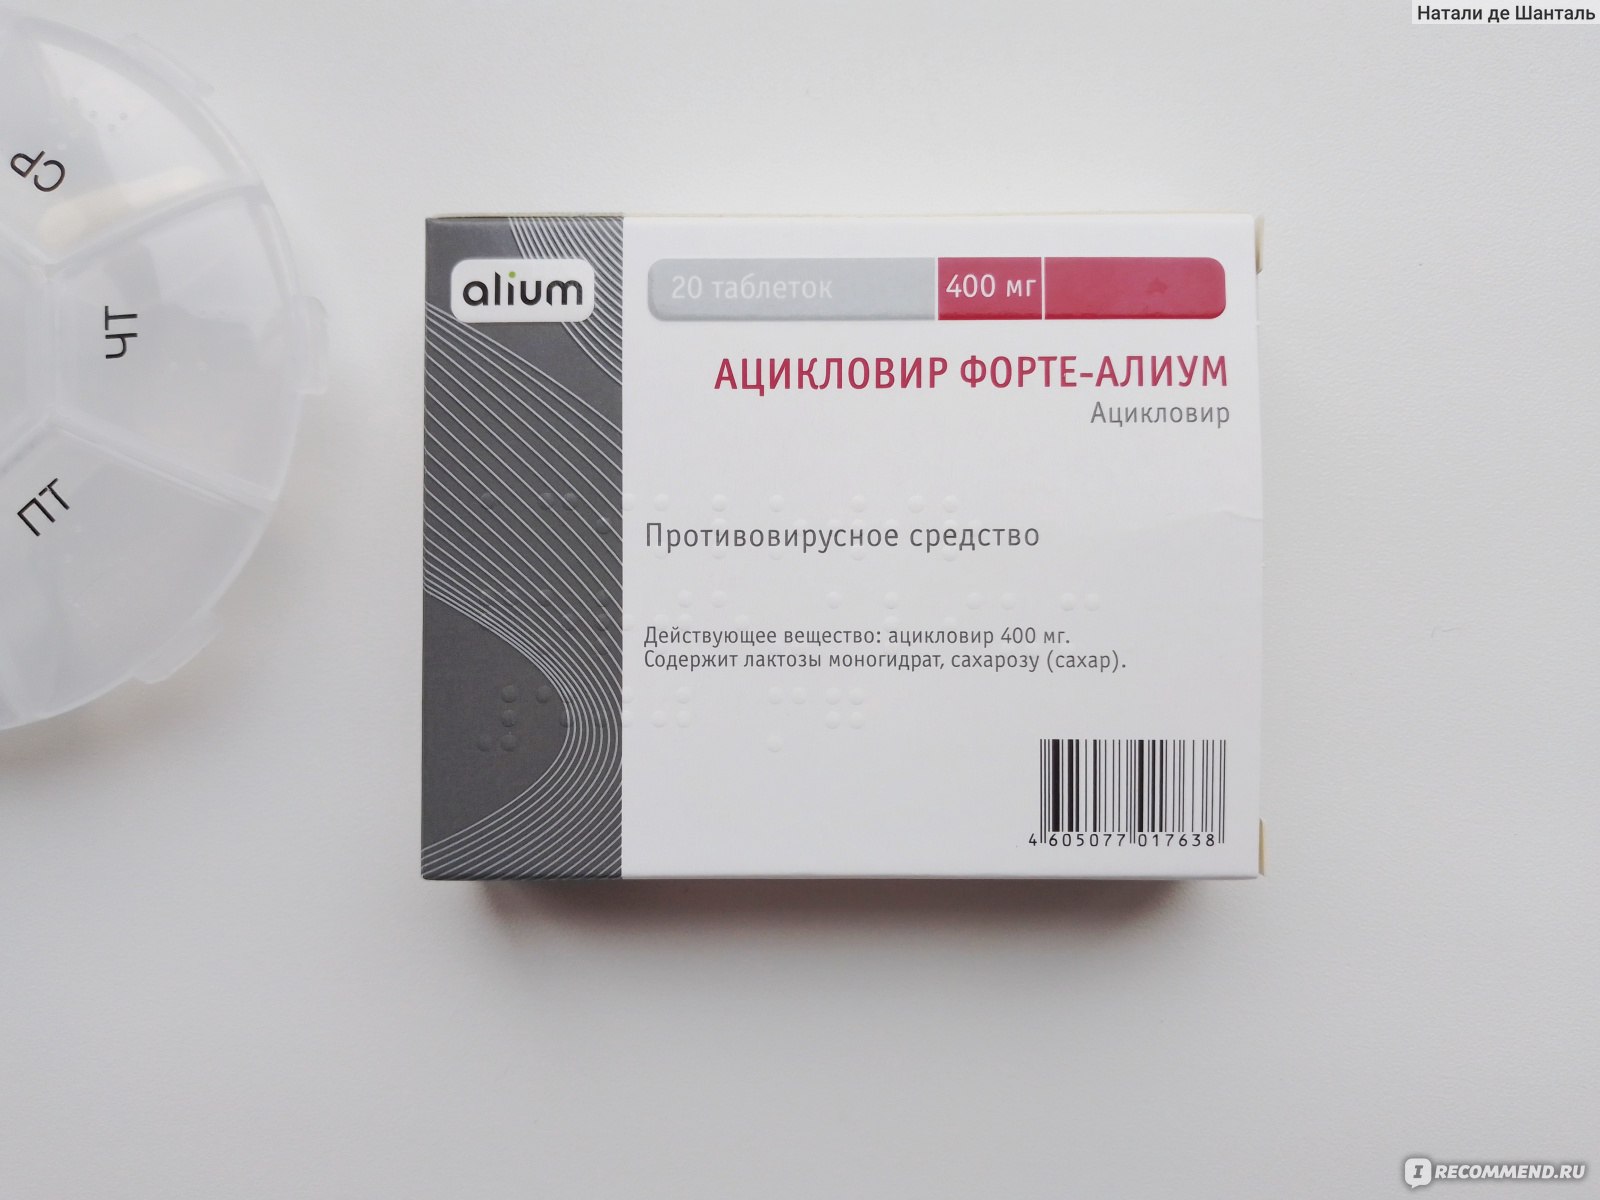 Таблетки Alium Ацикловир Форте-Алиум 400 мг N20 - «Много лет сжигала .